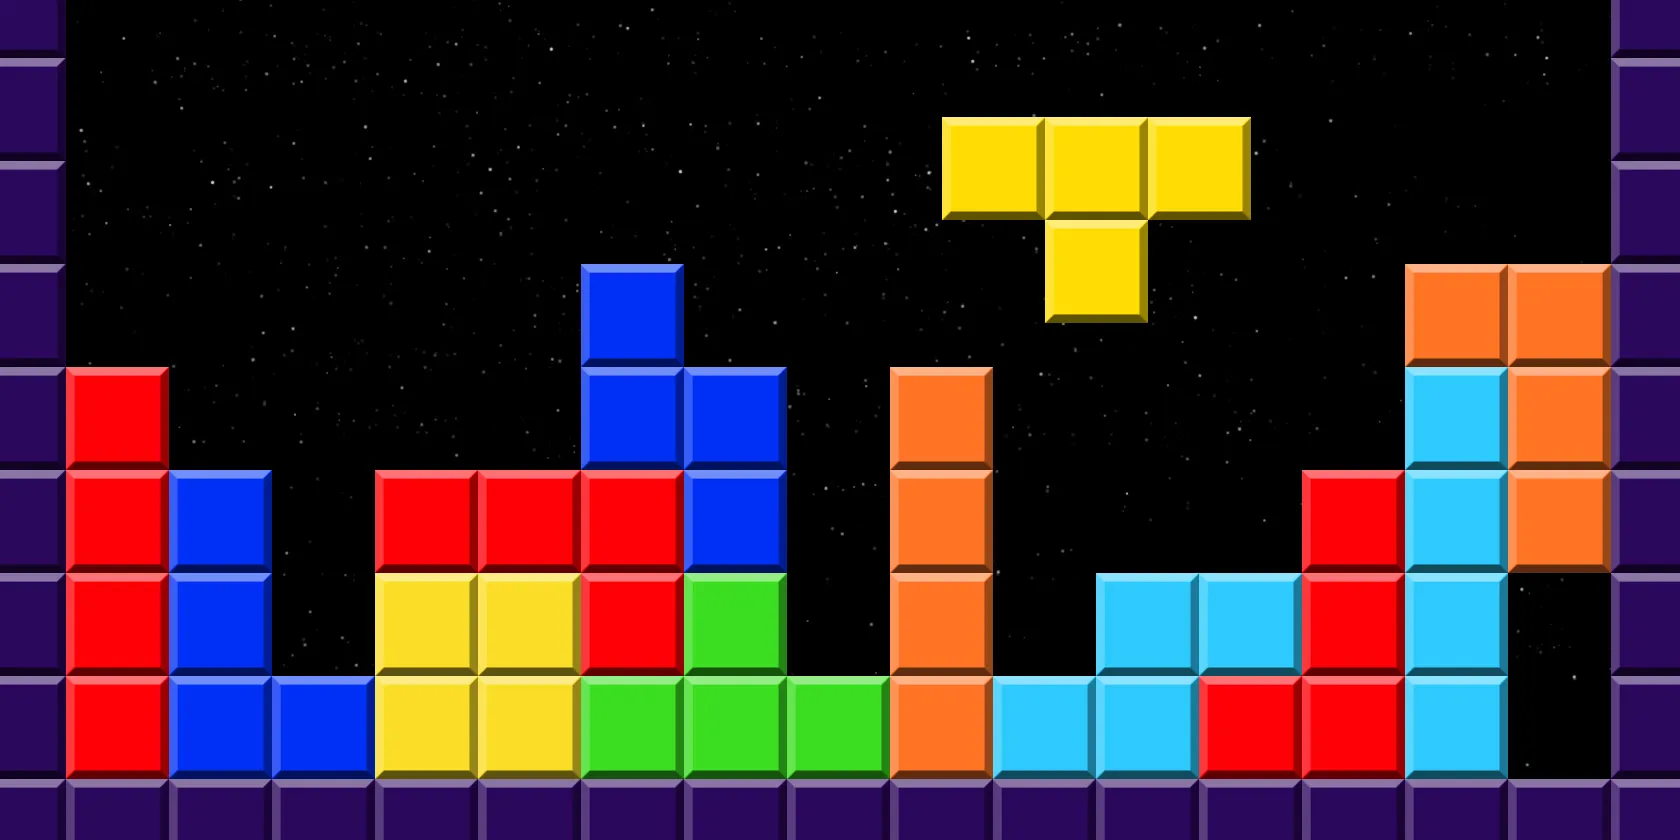 Joven de 13 años termina "Tetris"